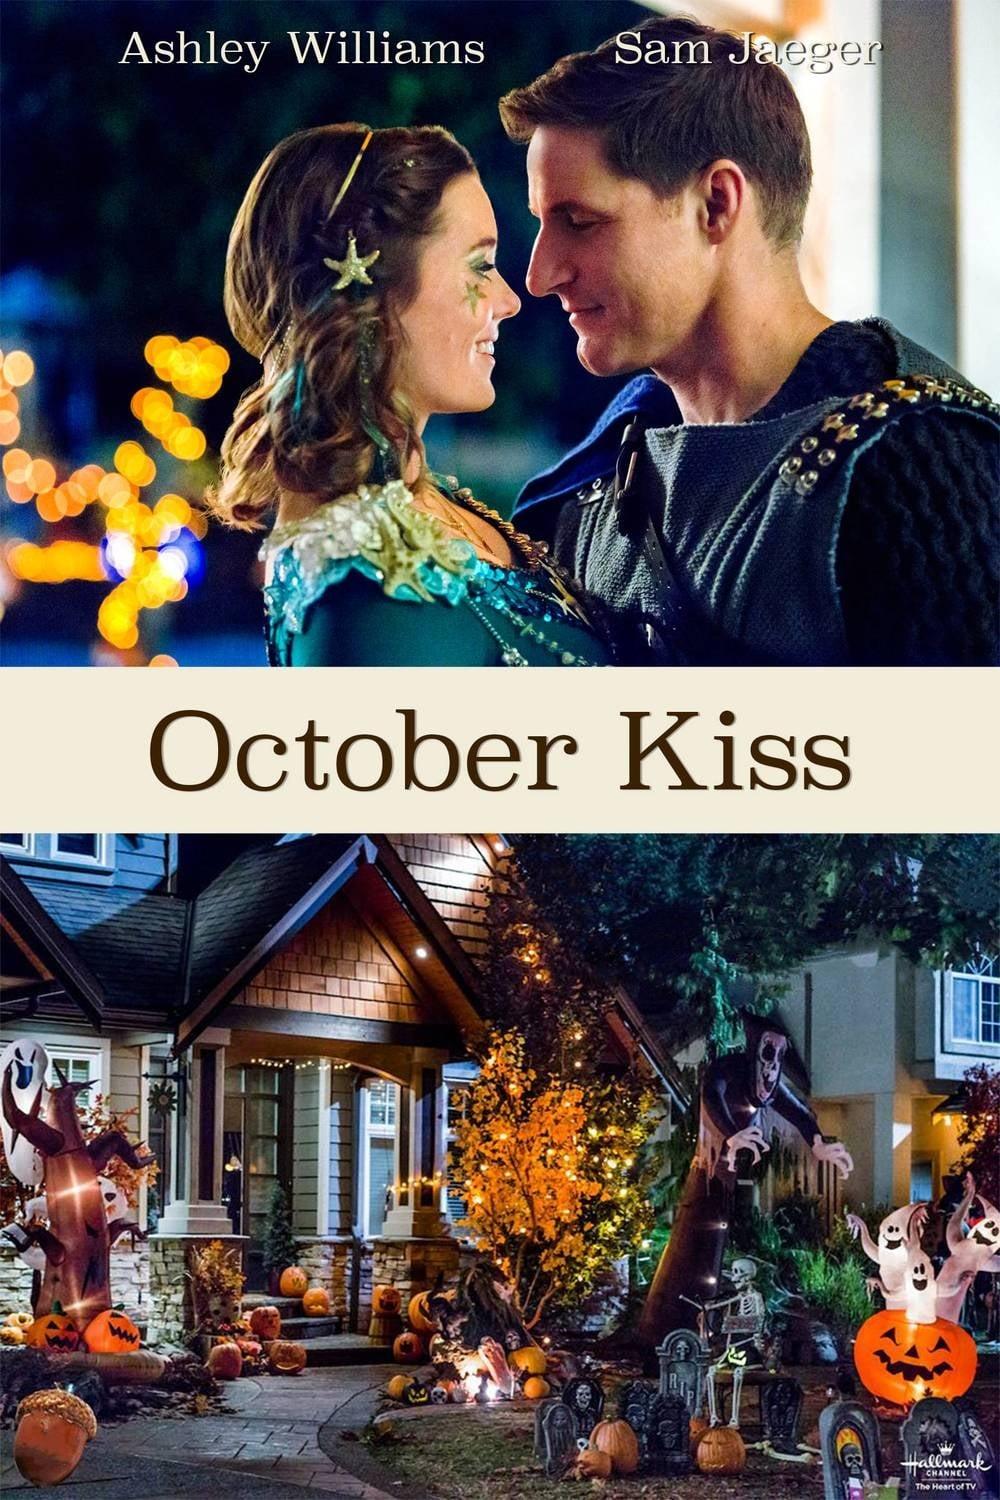 October Kiss poster